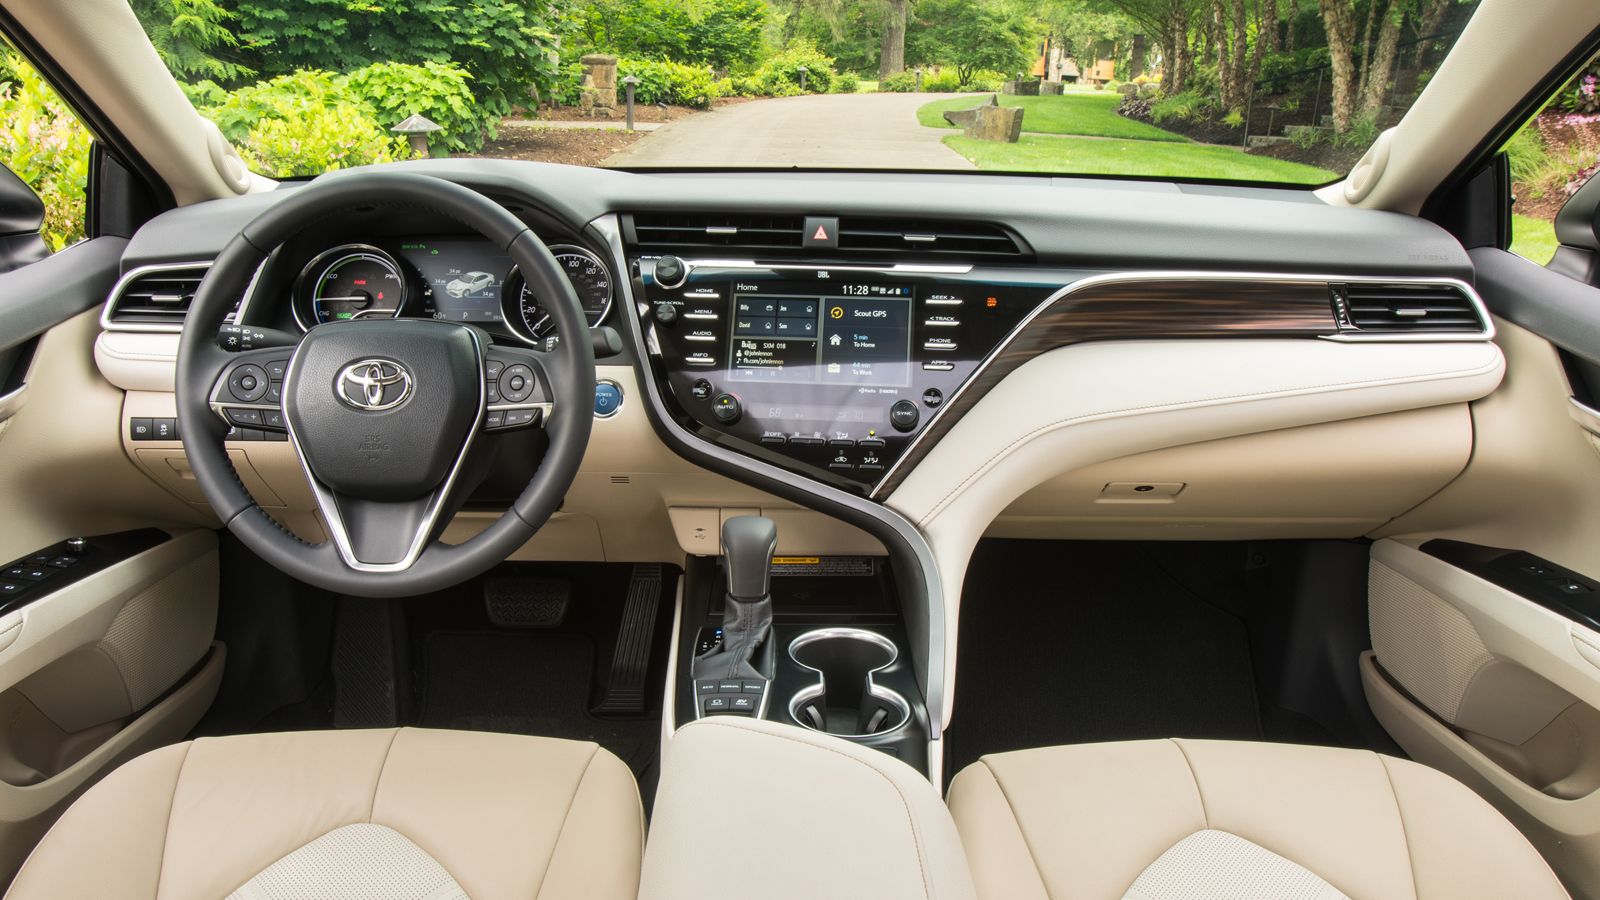 2019 Toyota Camry Hybrid Interior